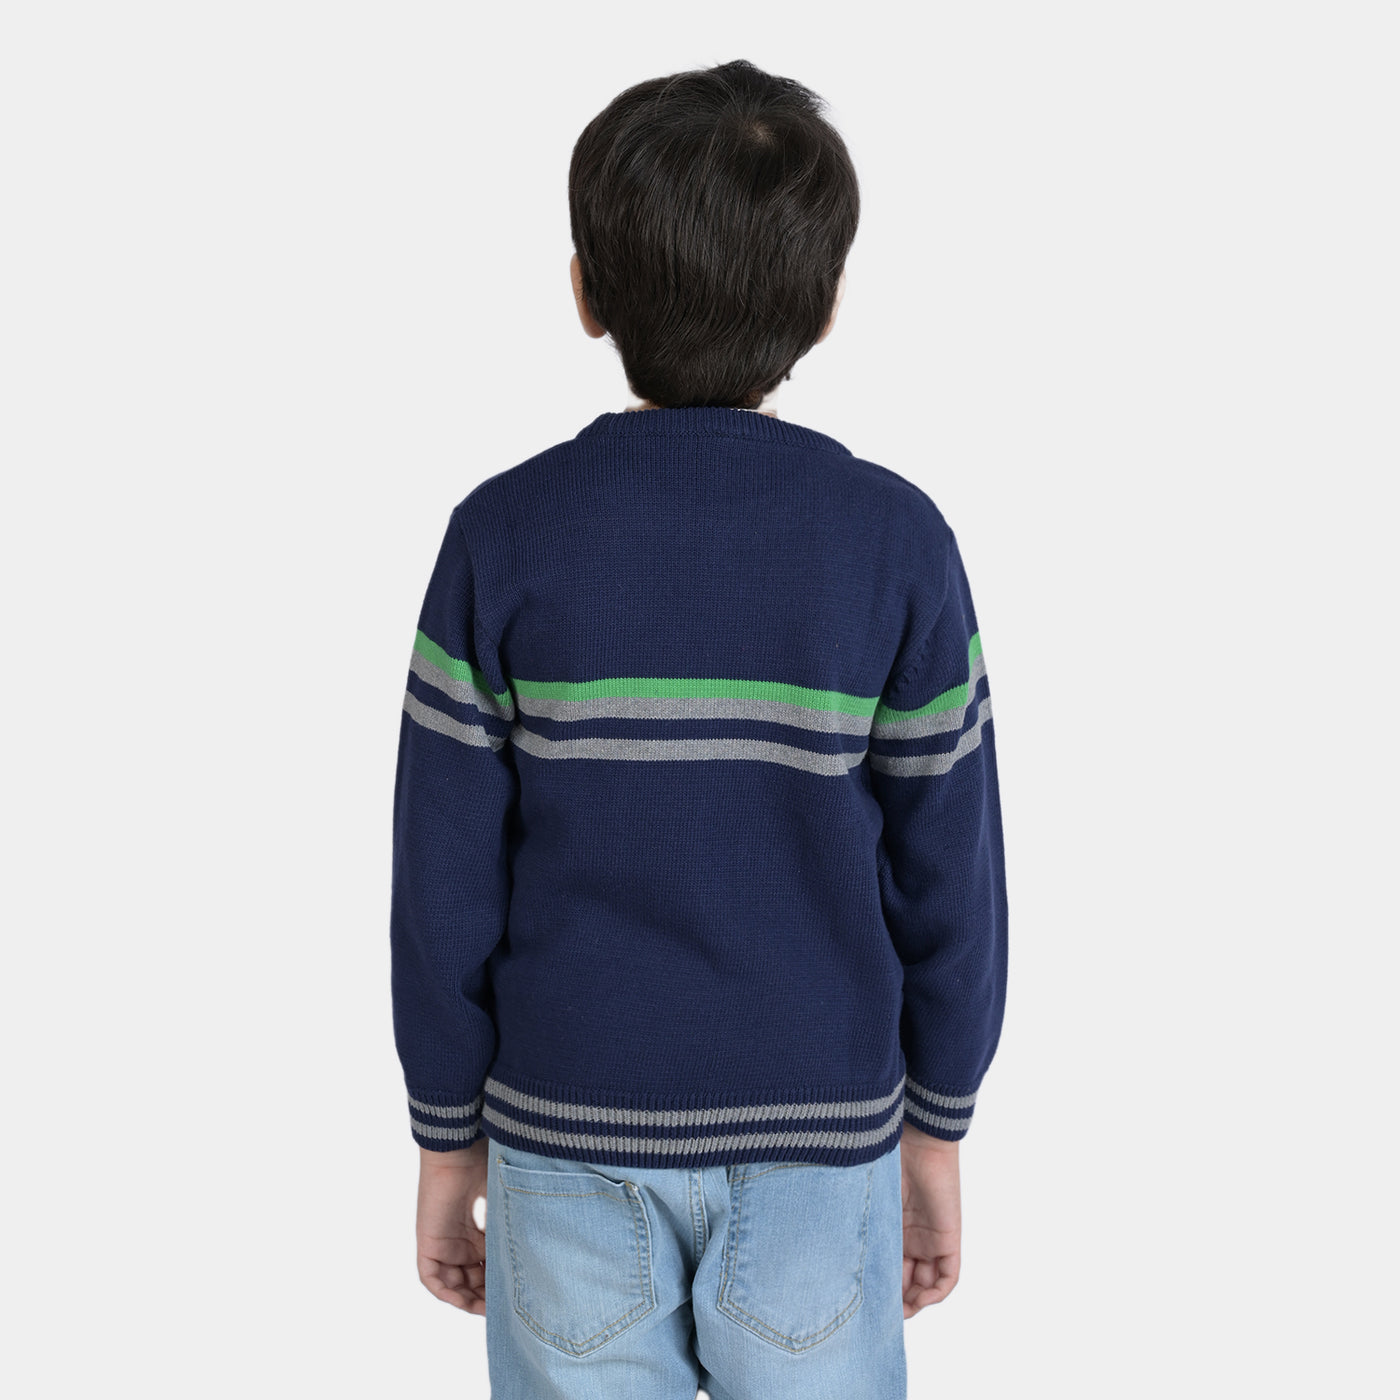 Boys Acrylic Full Sleeves Sweater Striper-Teal